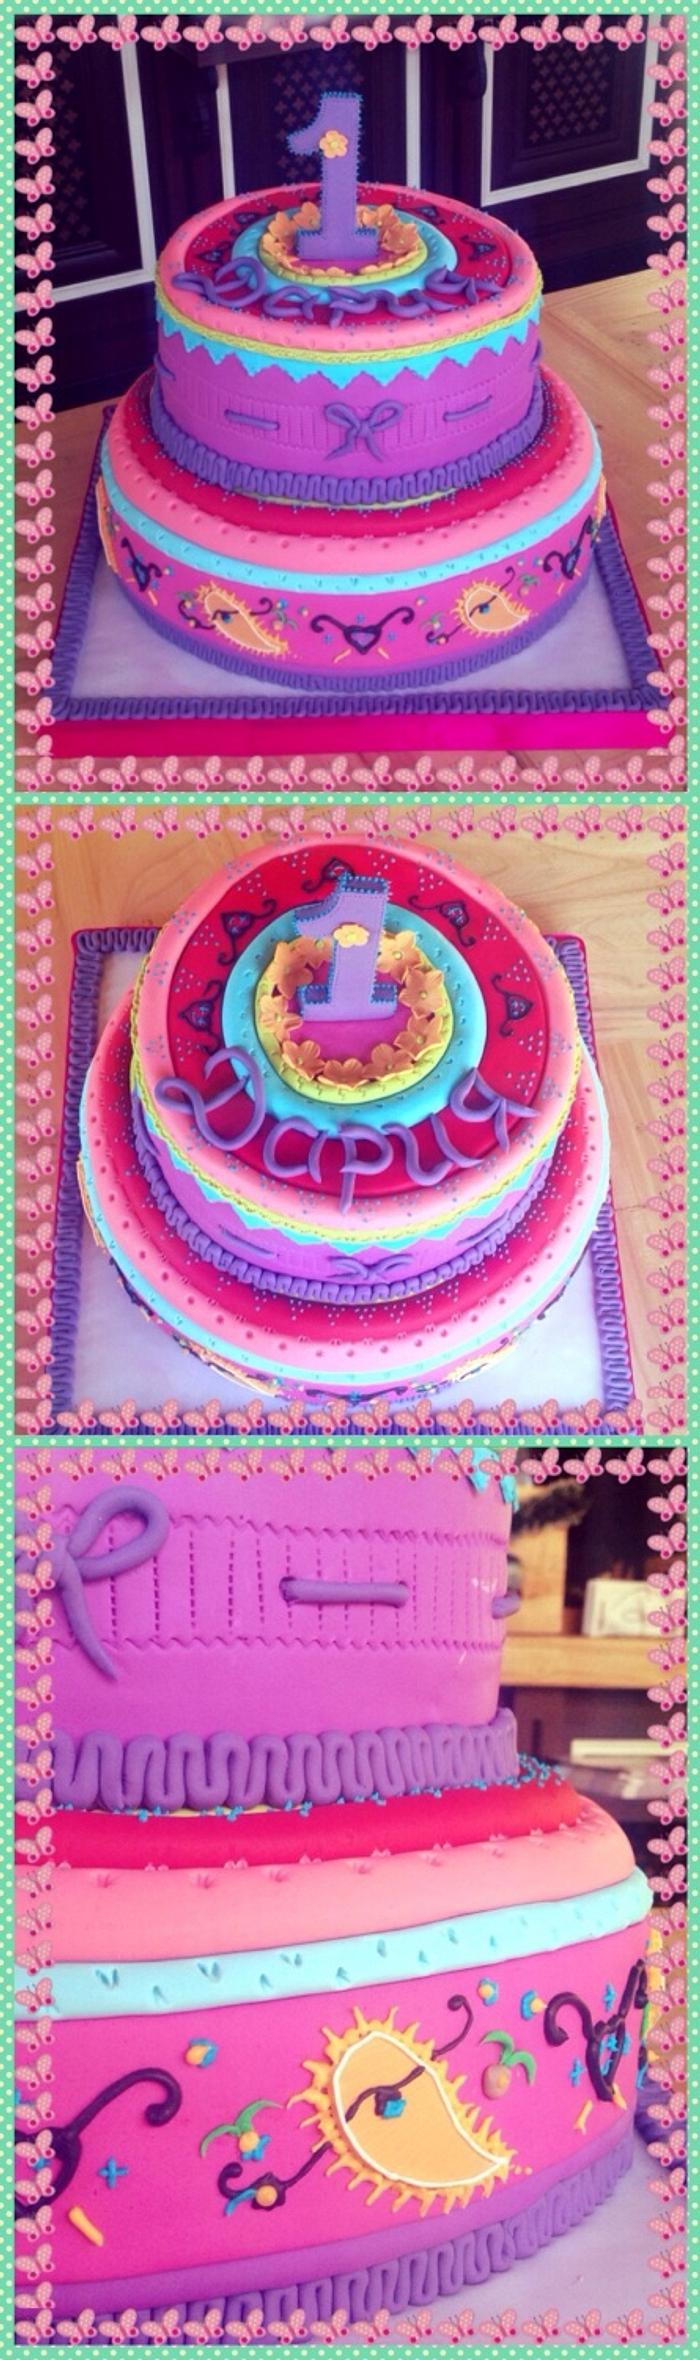 Daria's cake